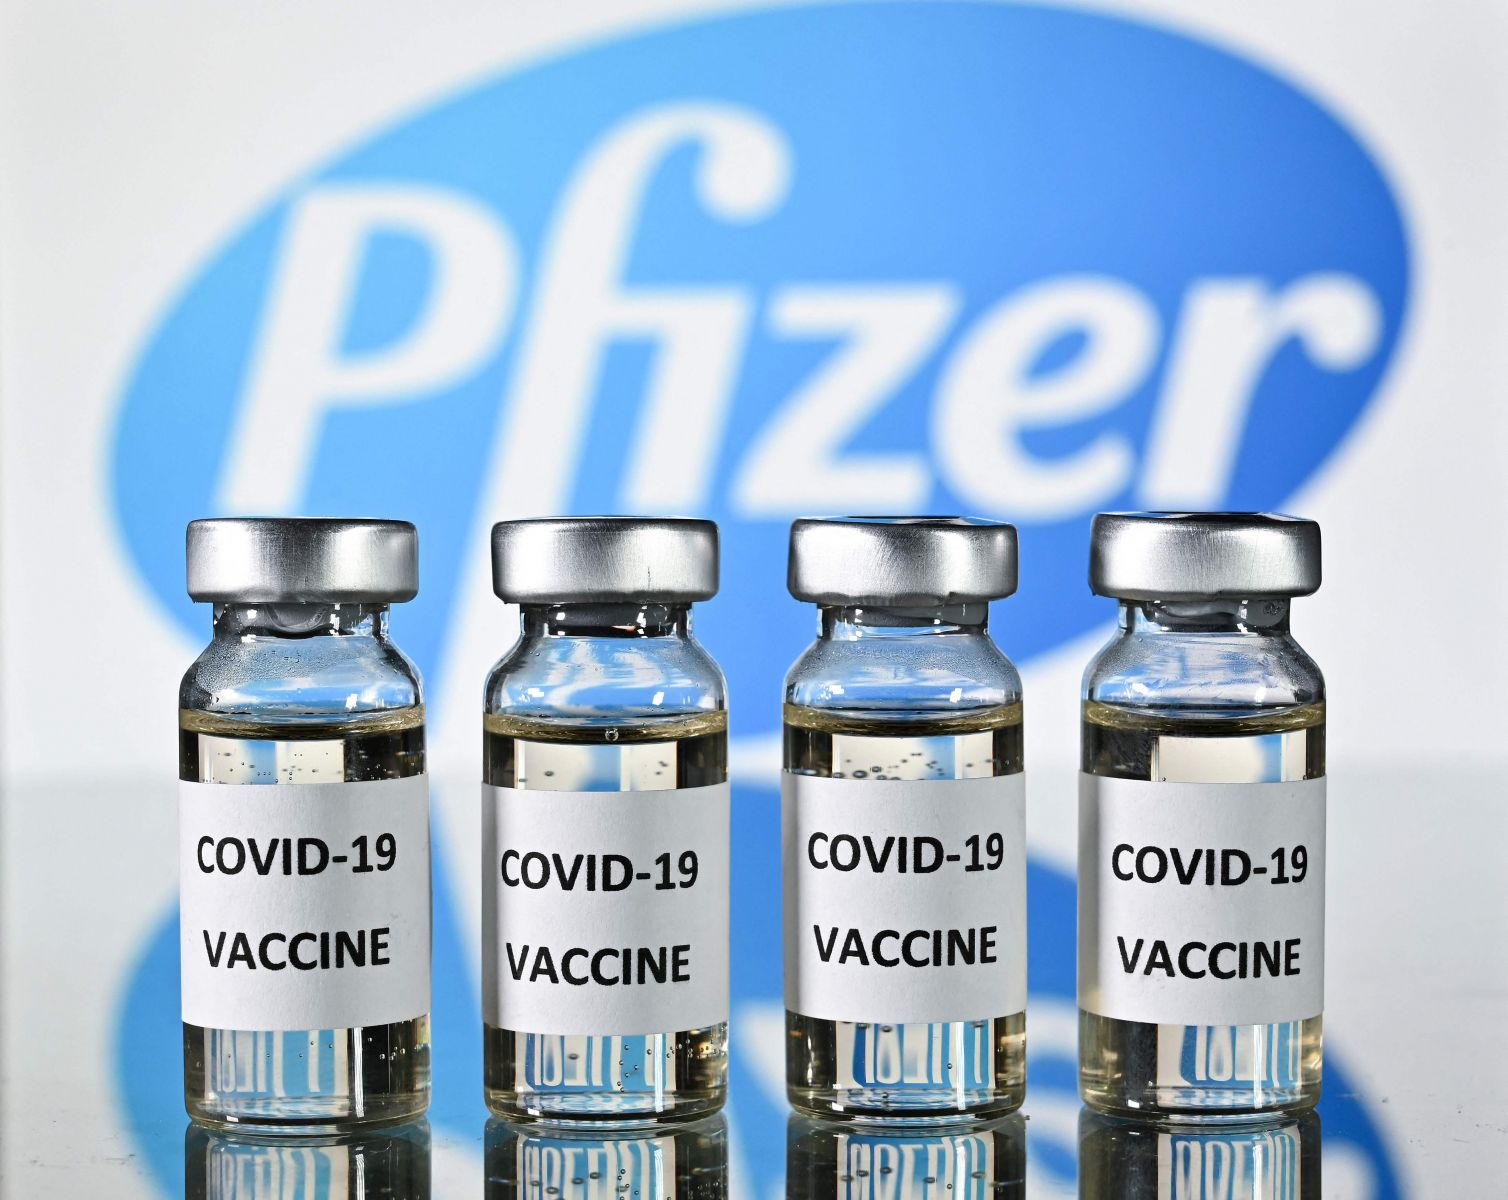 Vaksin comirnaty sama dengan pfizer